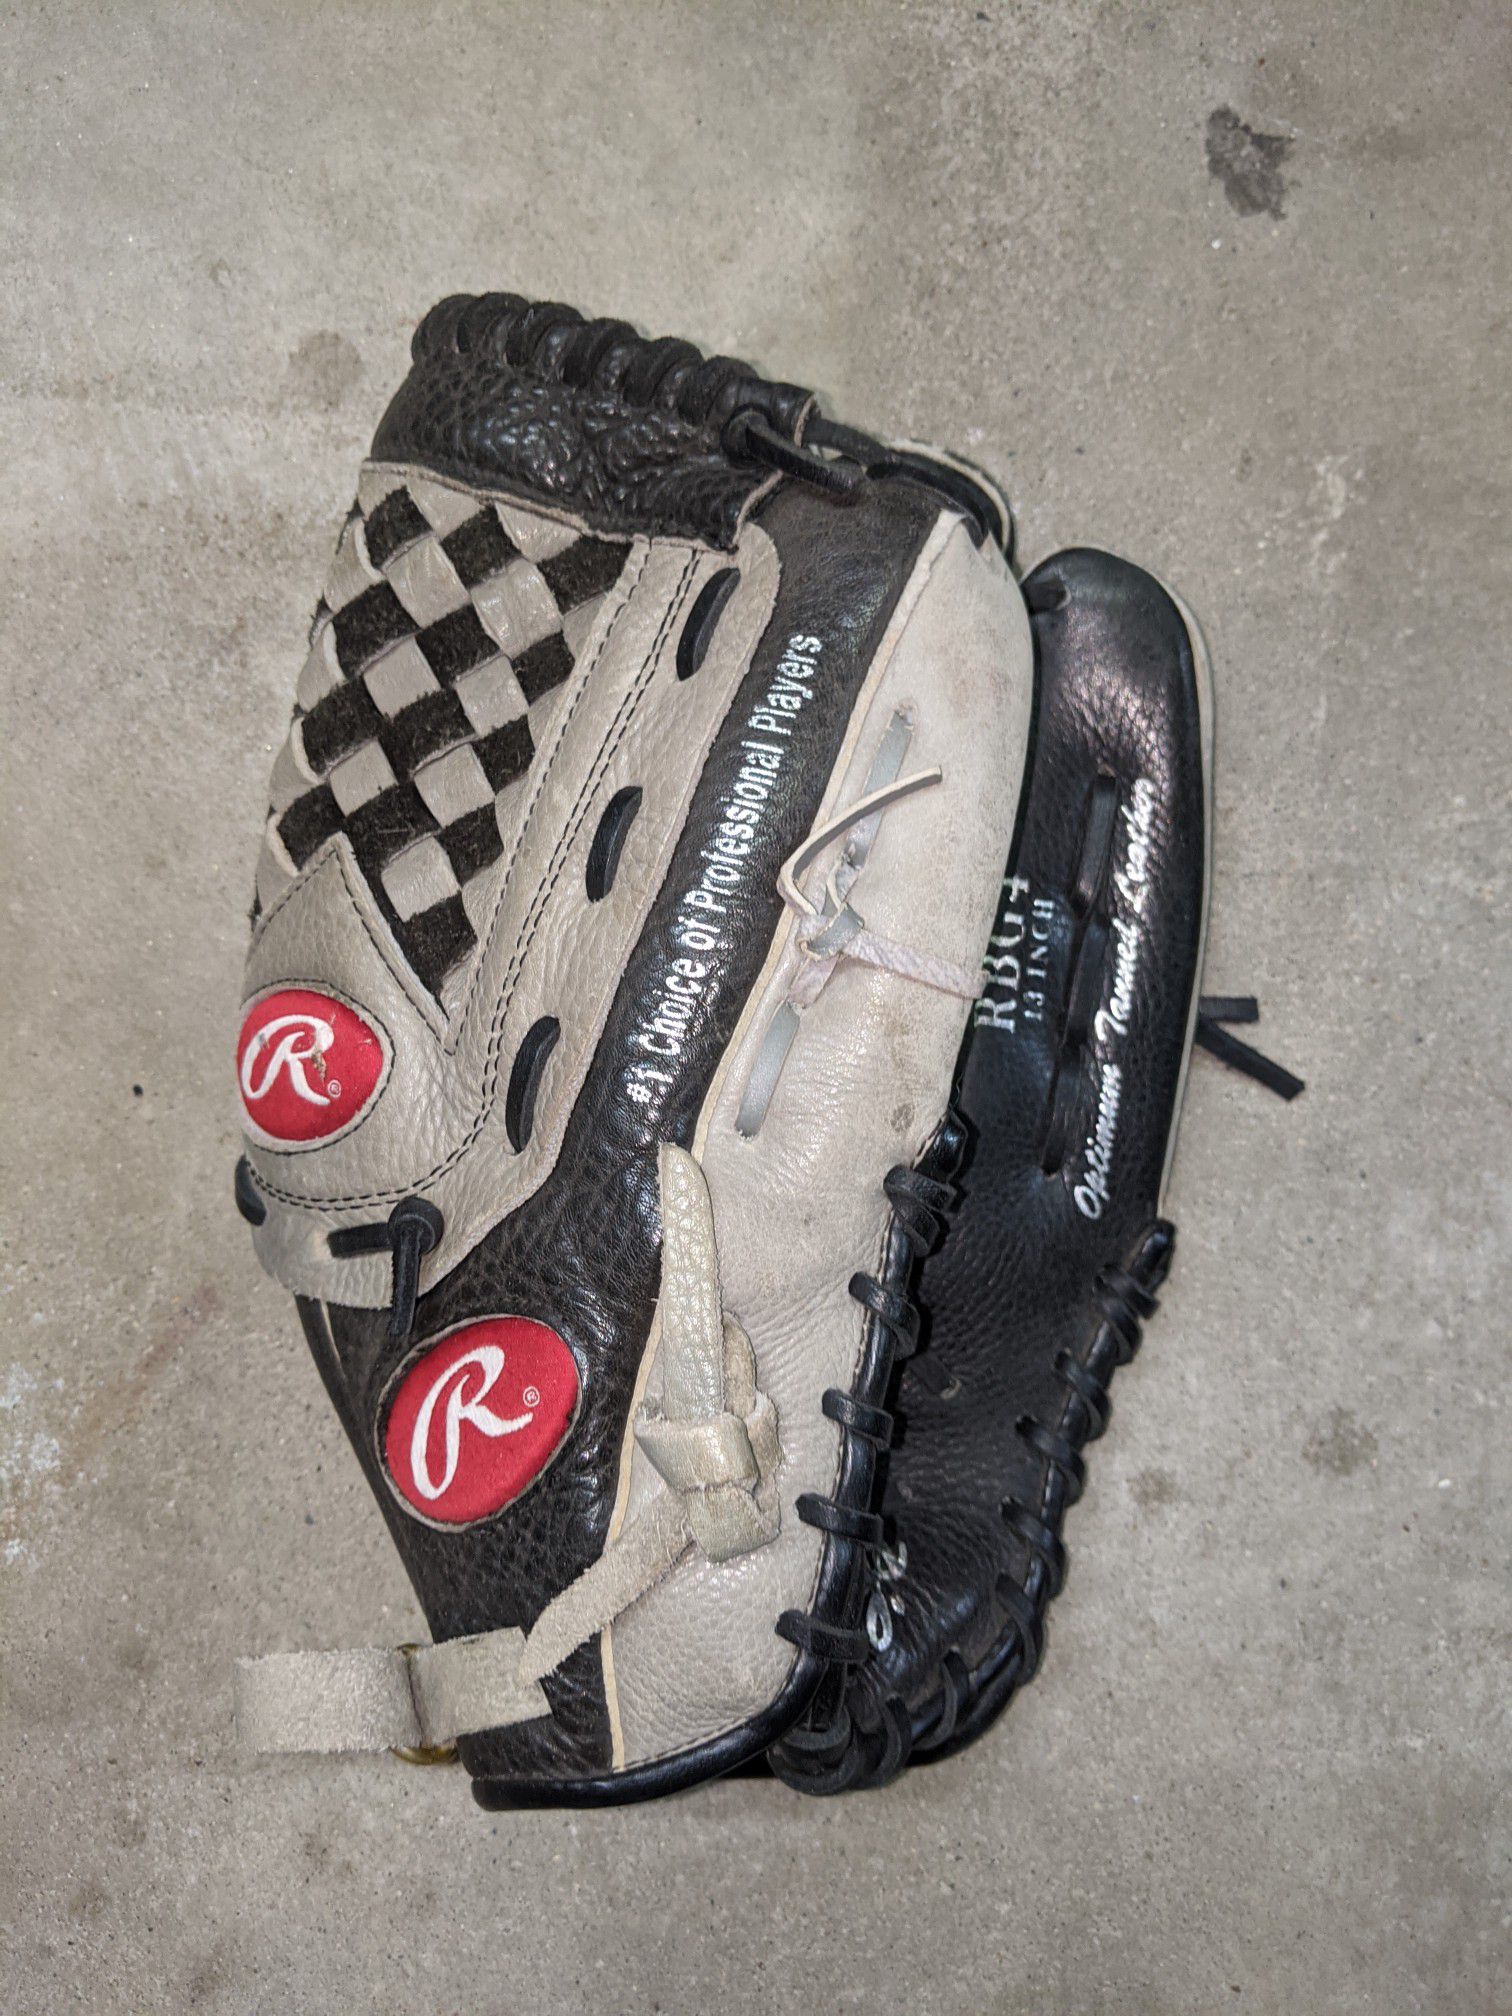 Rawlings RGB4 13 inch baseball softball glove